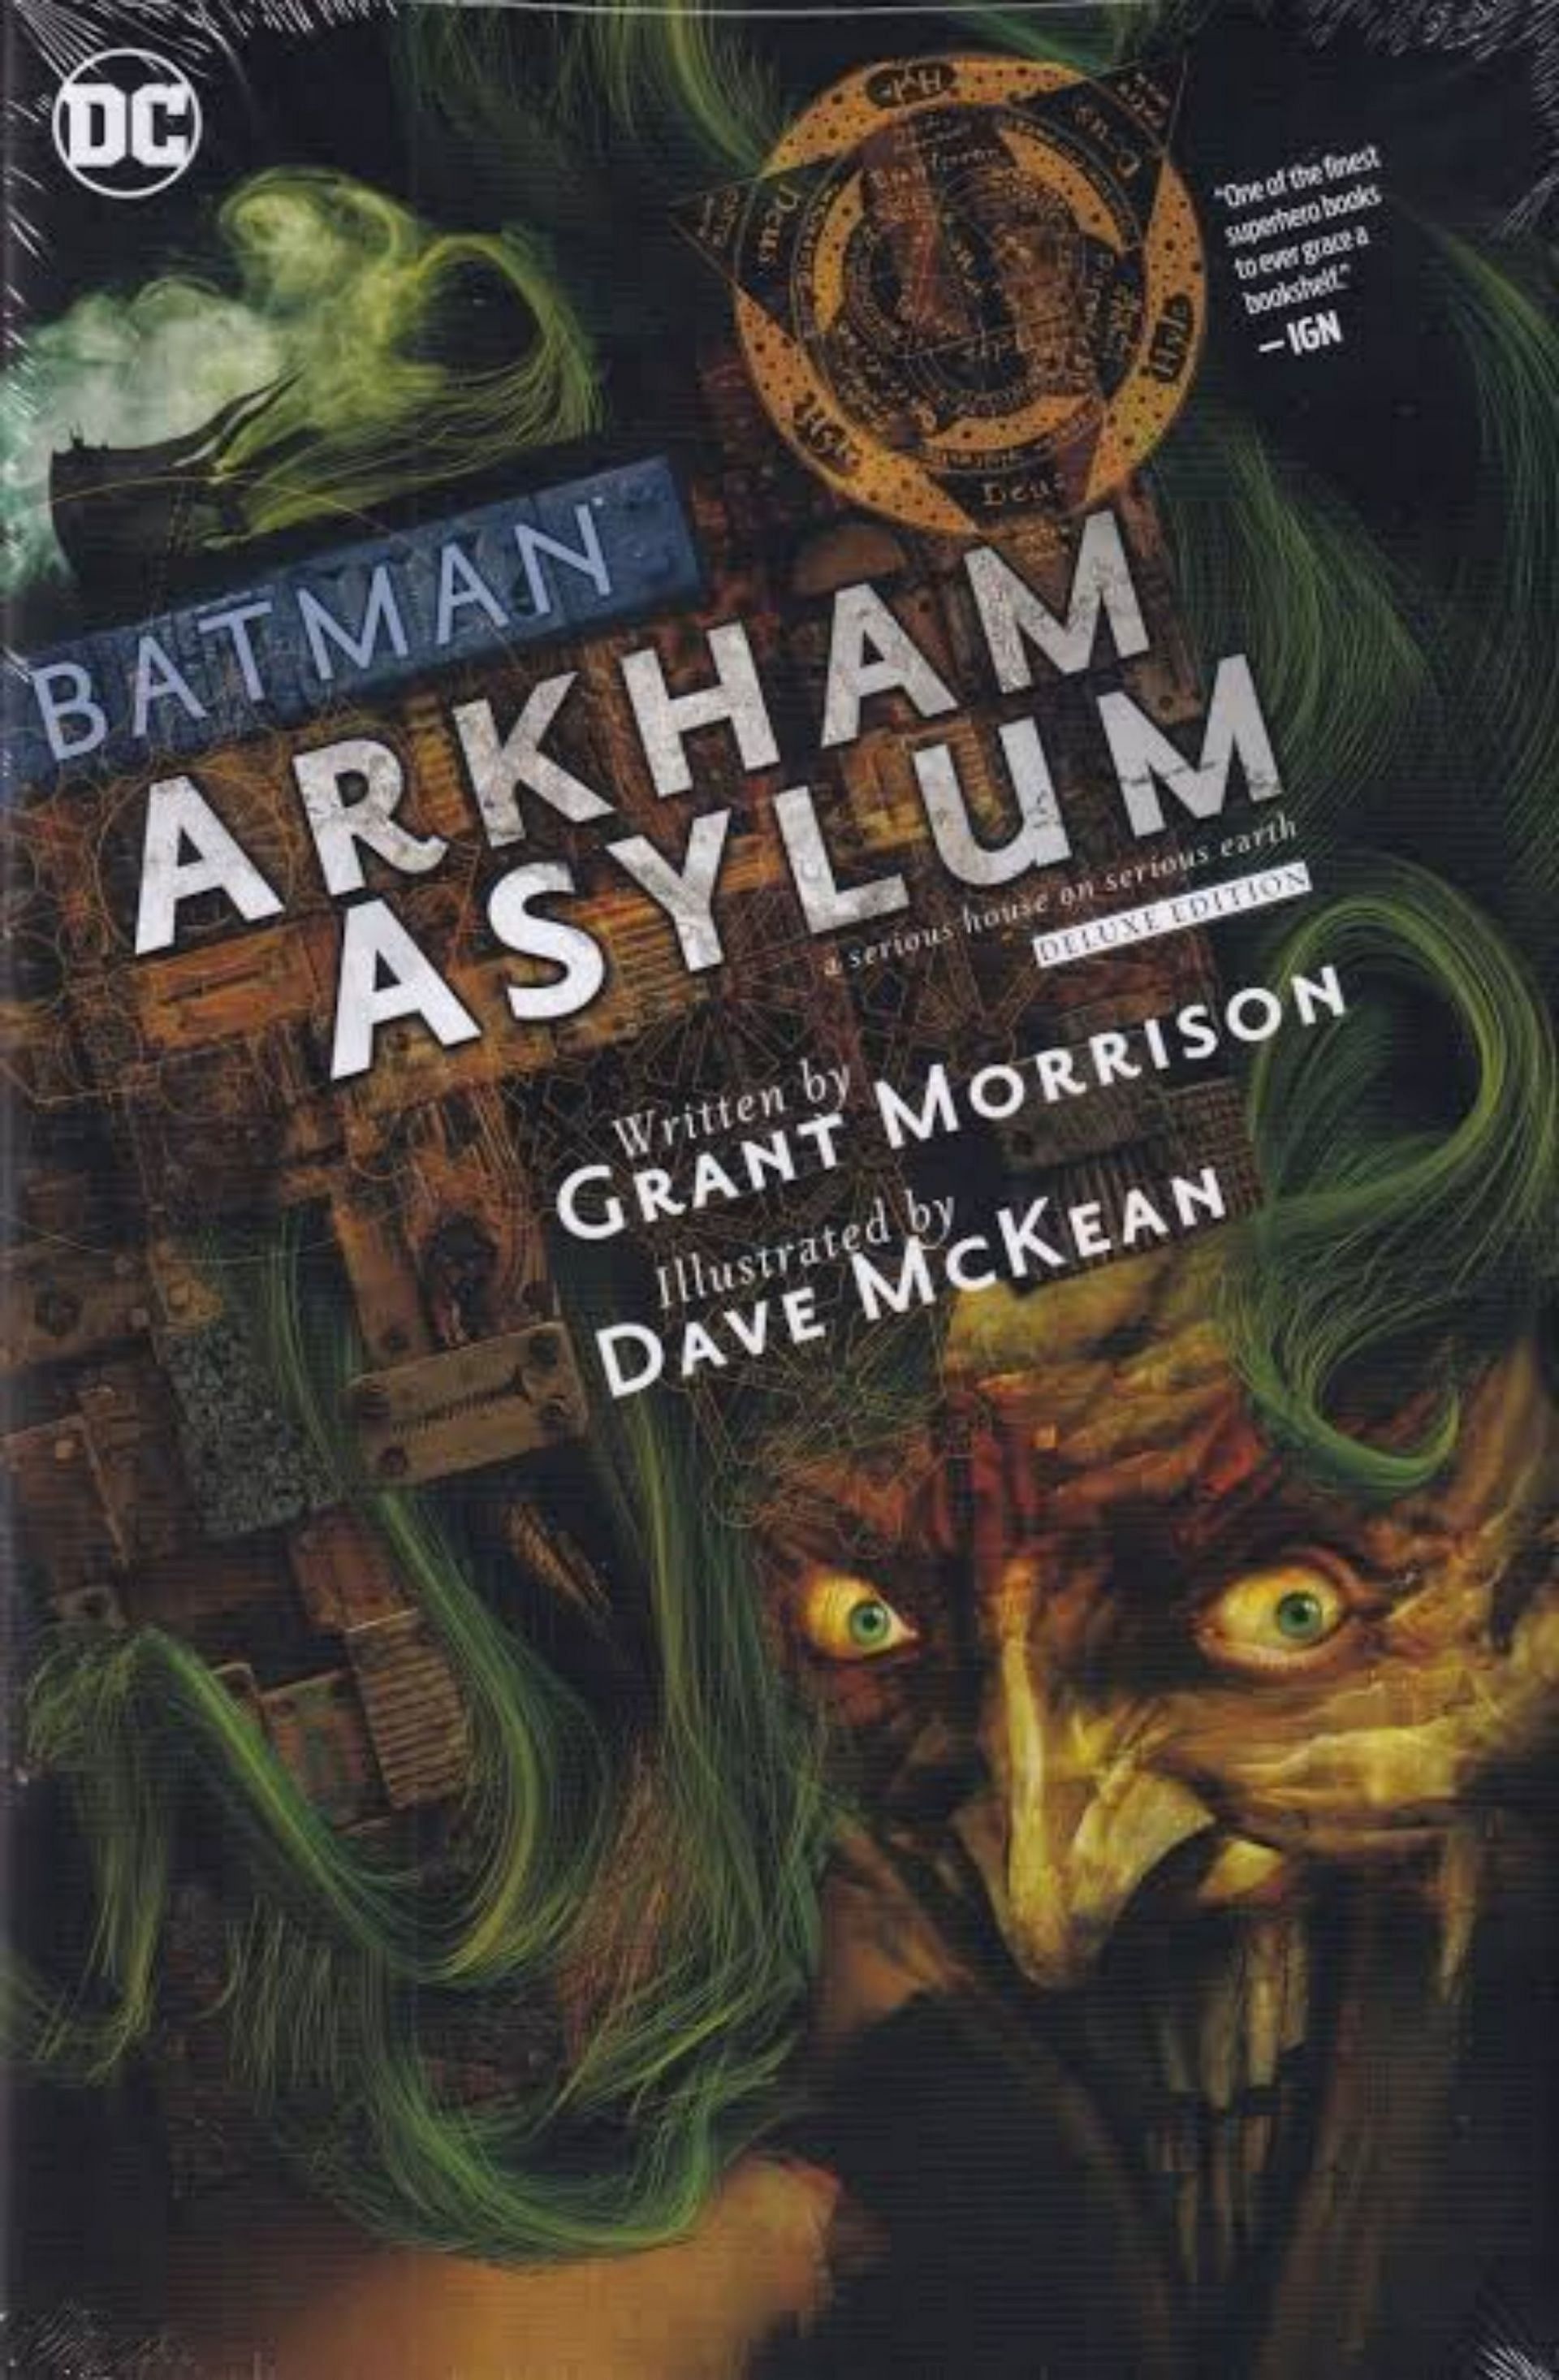 Arkham Asylum comic book cover (Image via DC Comics)